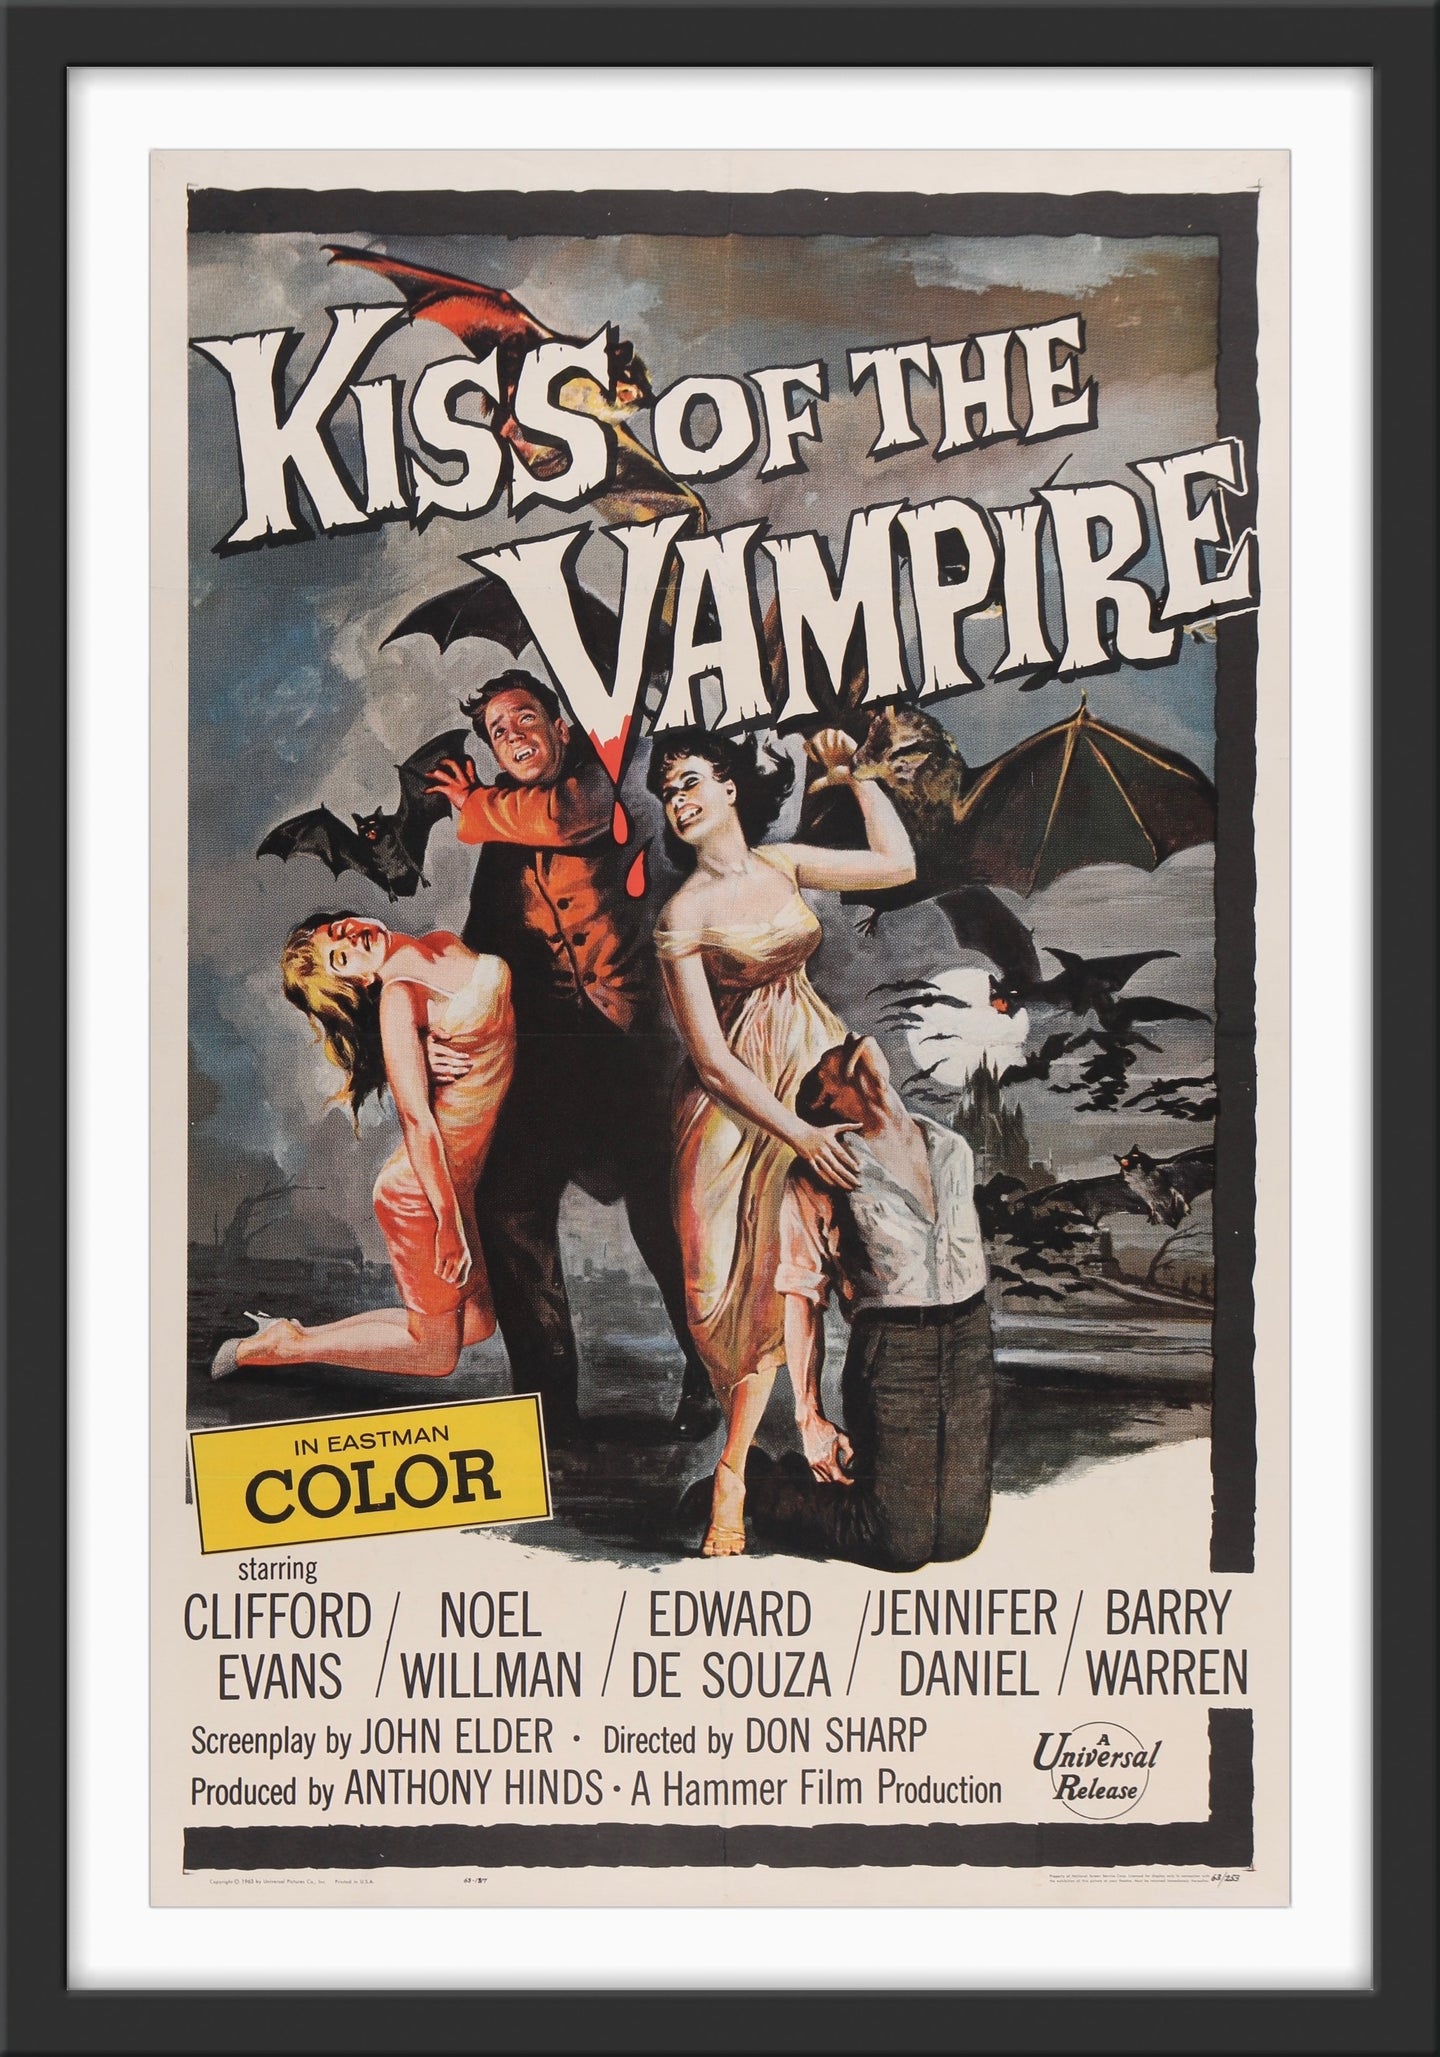 An original movie poster for the Hammer Horror film Kiss of The Vampire